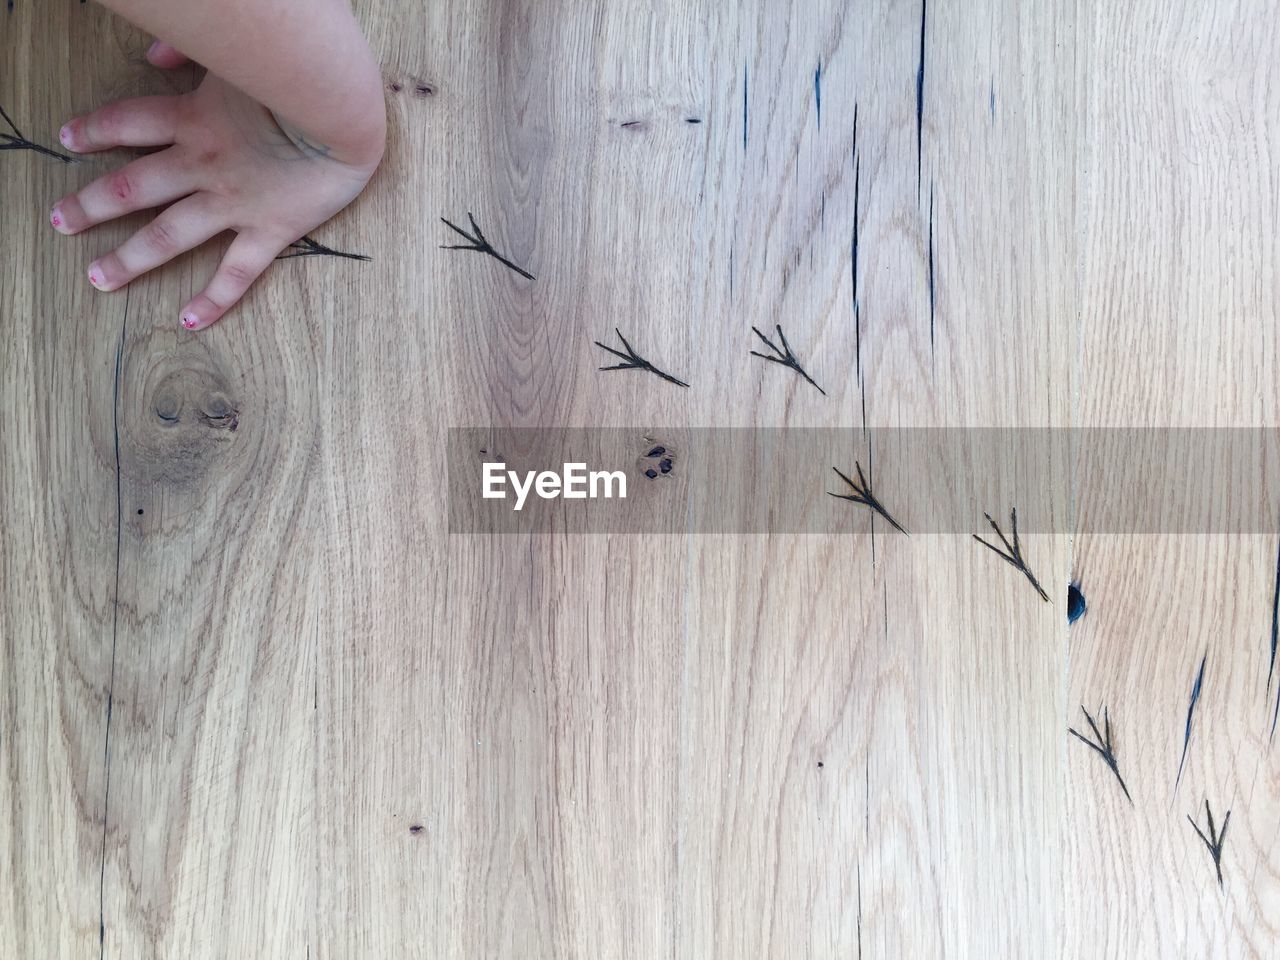 Bird tracks on wooden floor